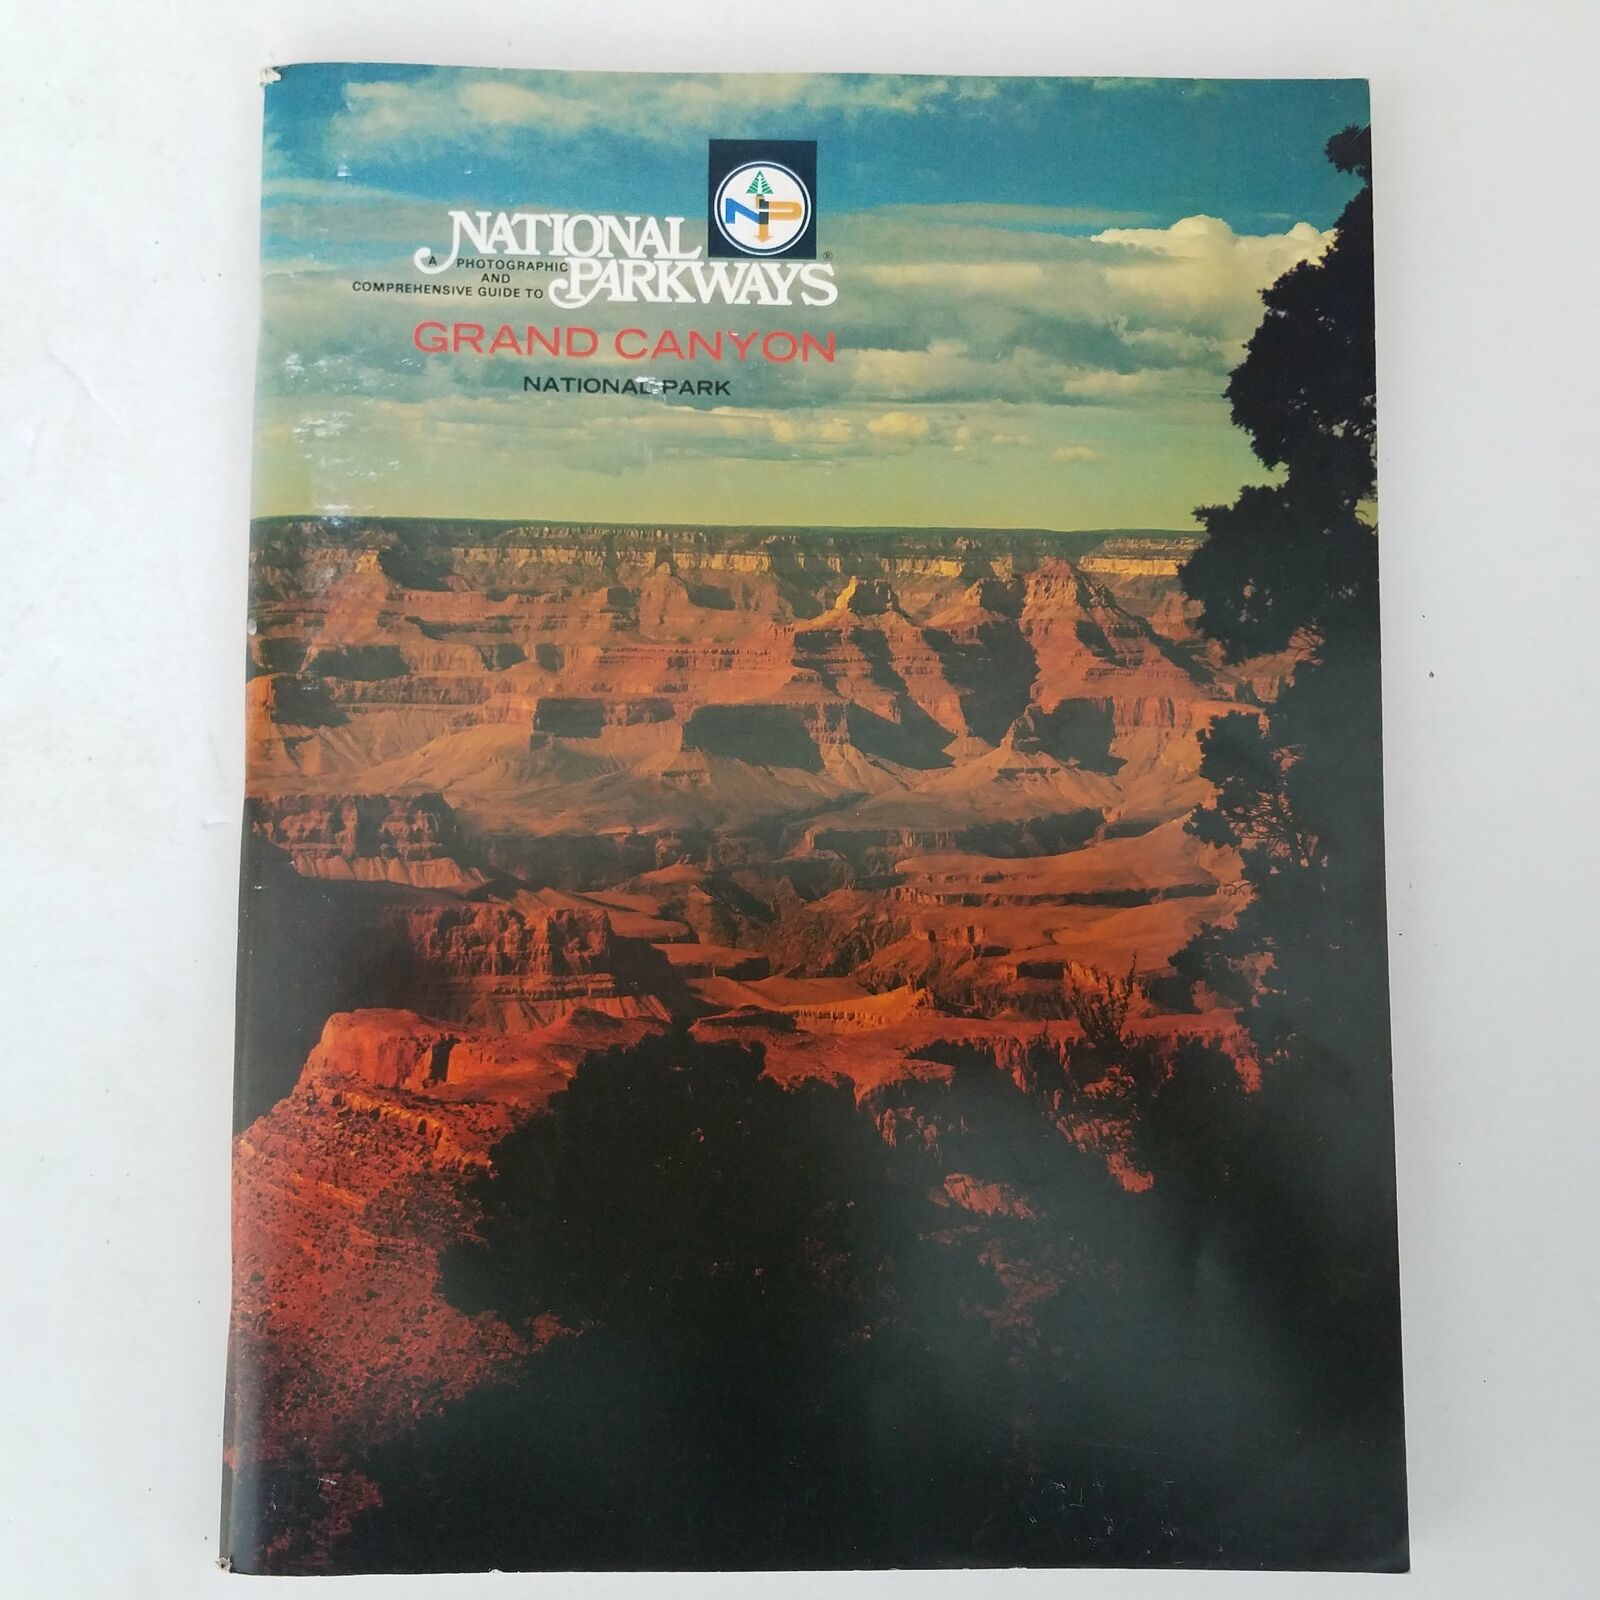 National Parkways - Grand Canyon National Park